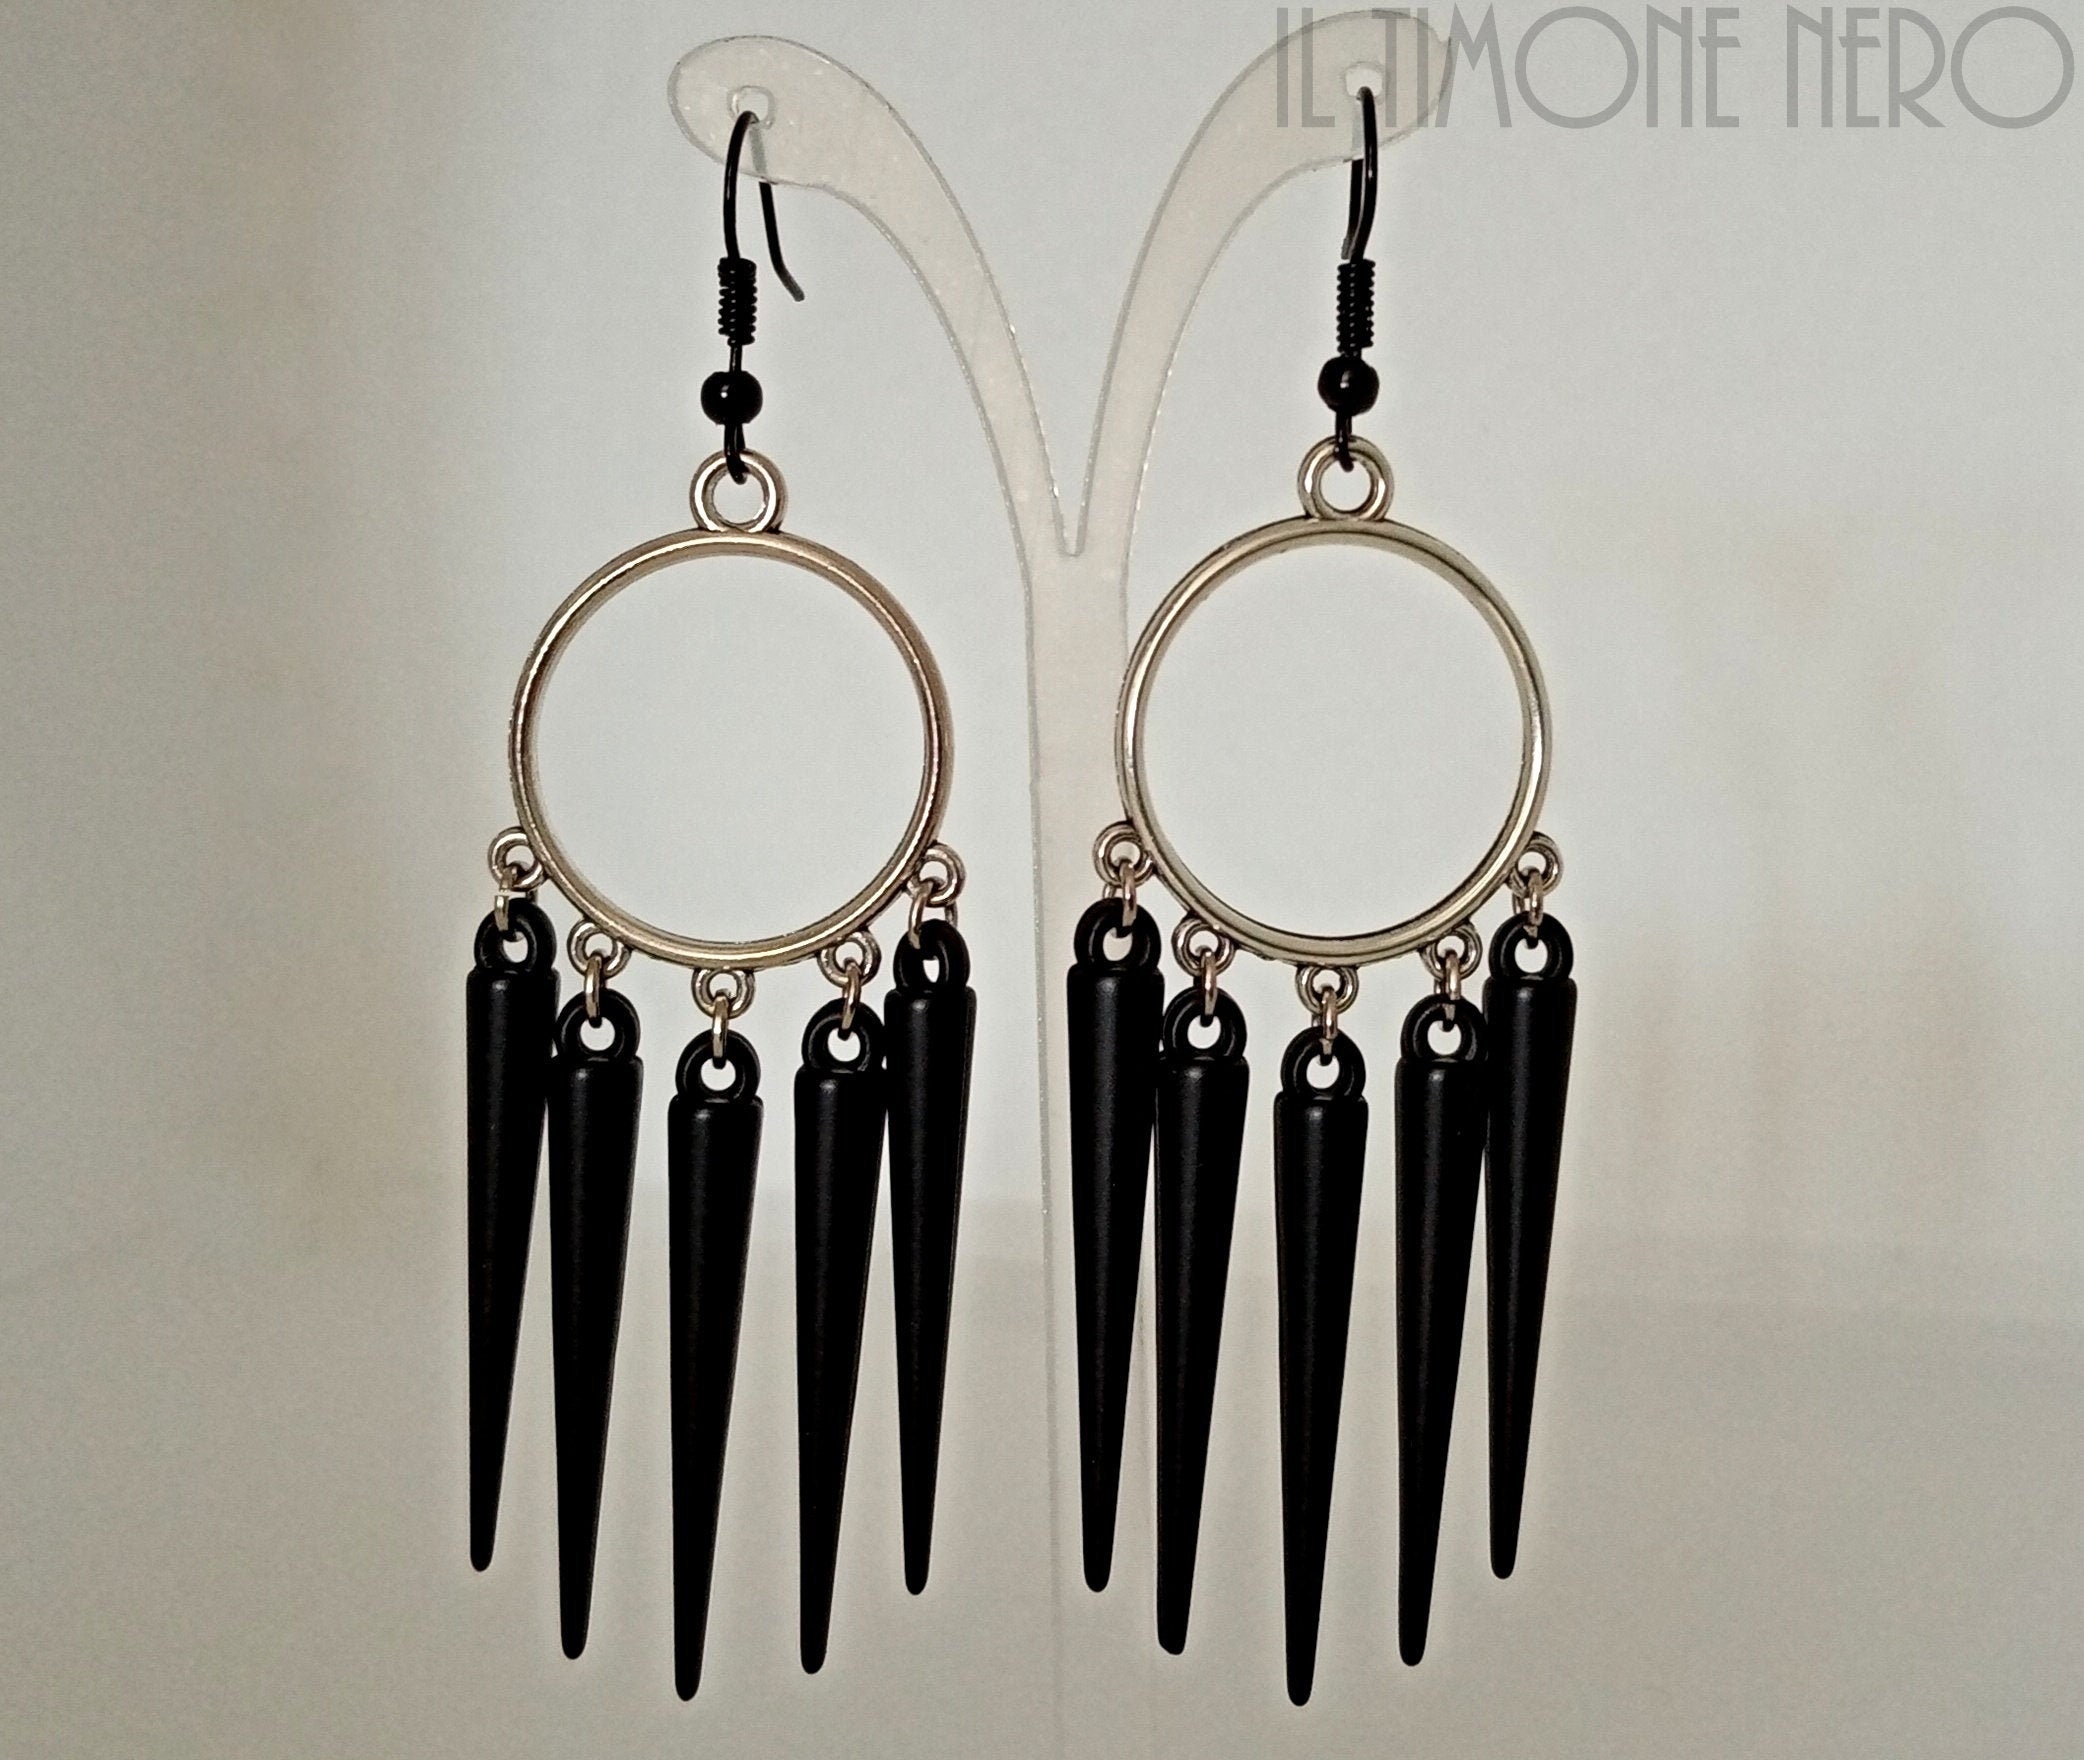 Hematite Black Spike Earrings Gothic Earrings Gothic Goth Steampunk